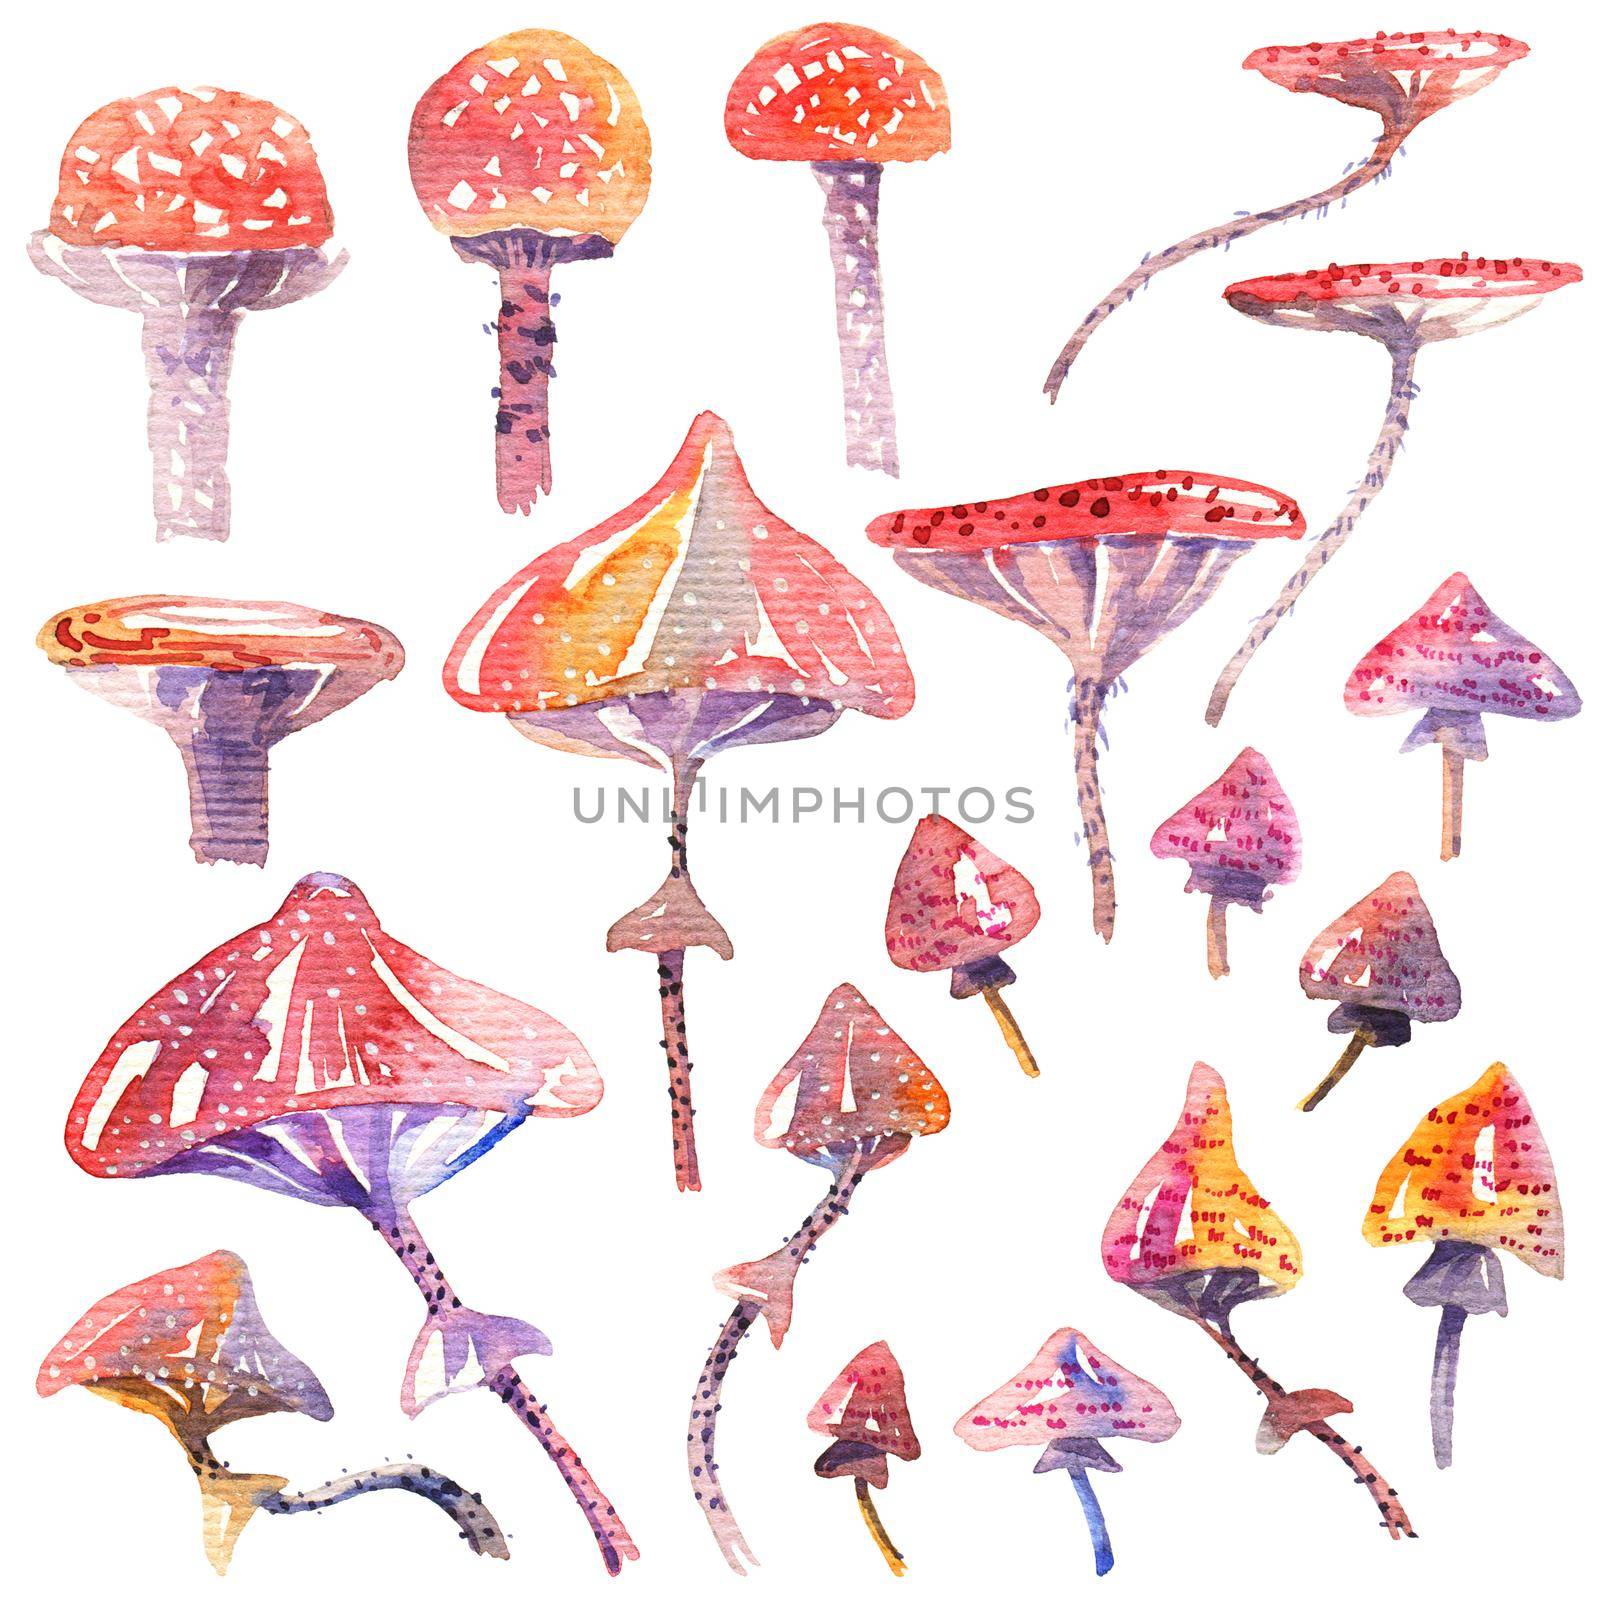 Watercolor mushrooms by Olatarakanova